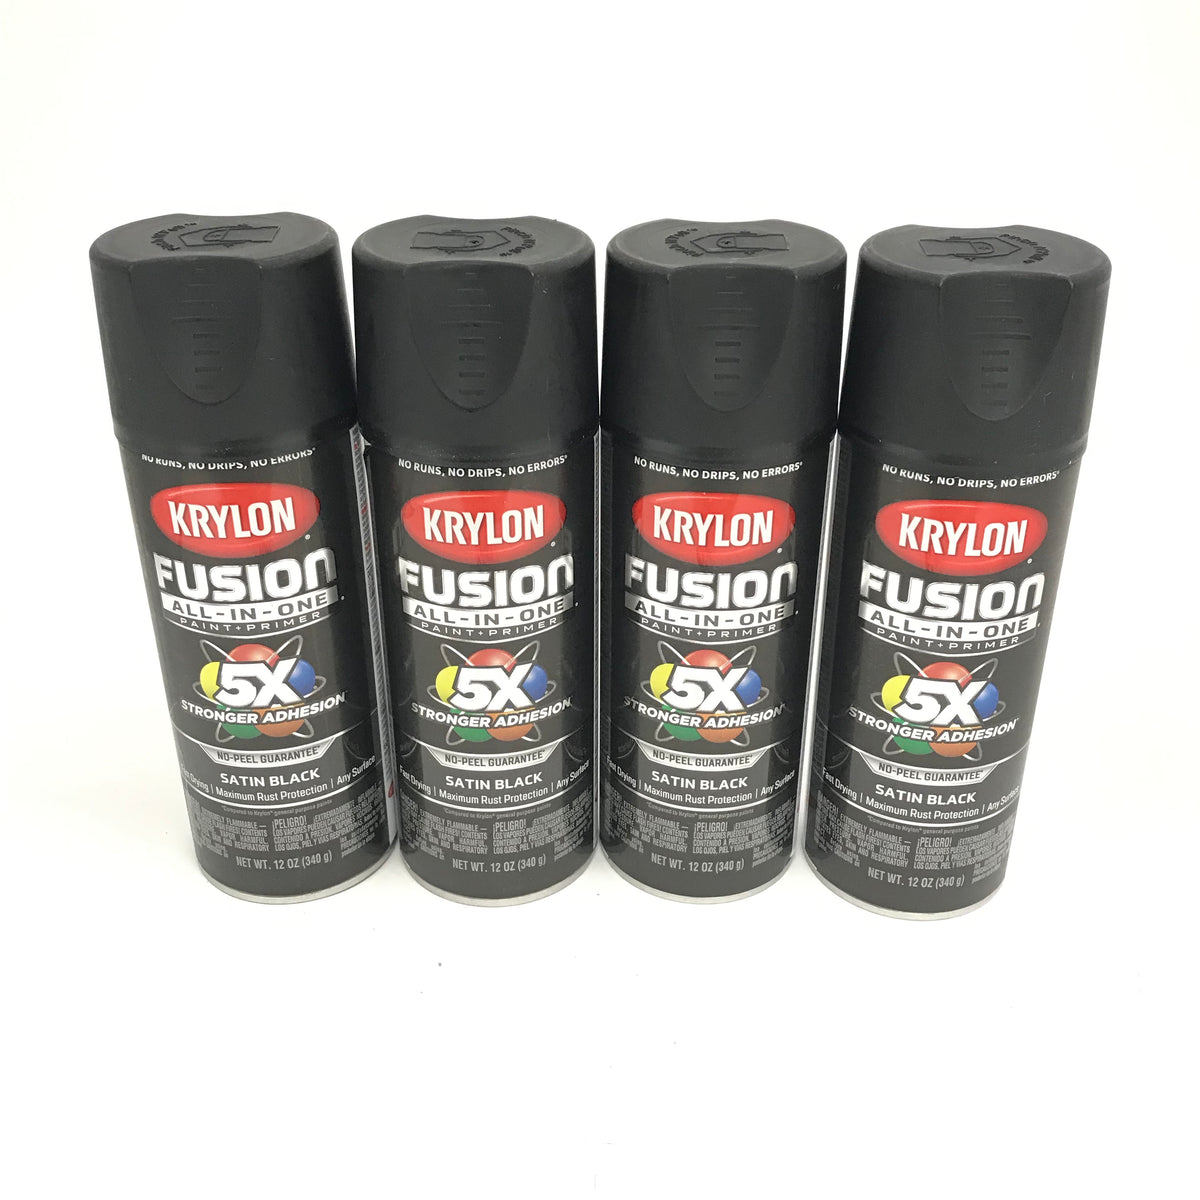 Krylon Fusion All-In-One Matte Spray Paint & Primer, Black